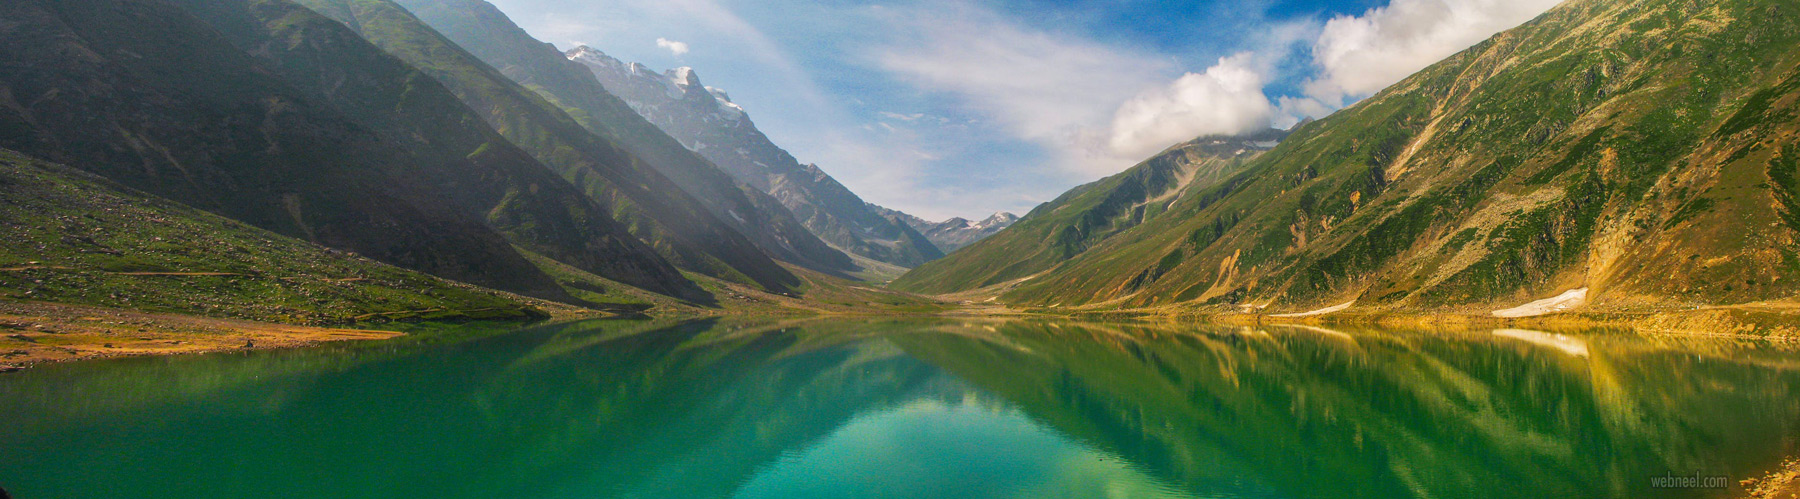 panoramic photography lake mountain by kamran khan